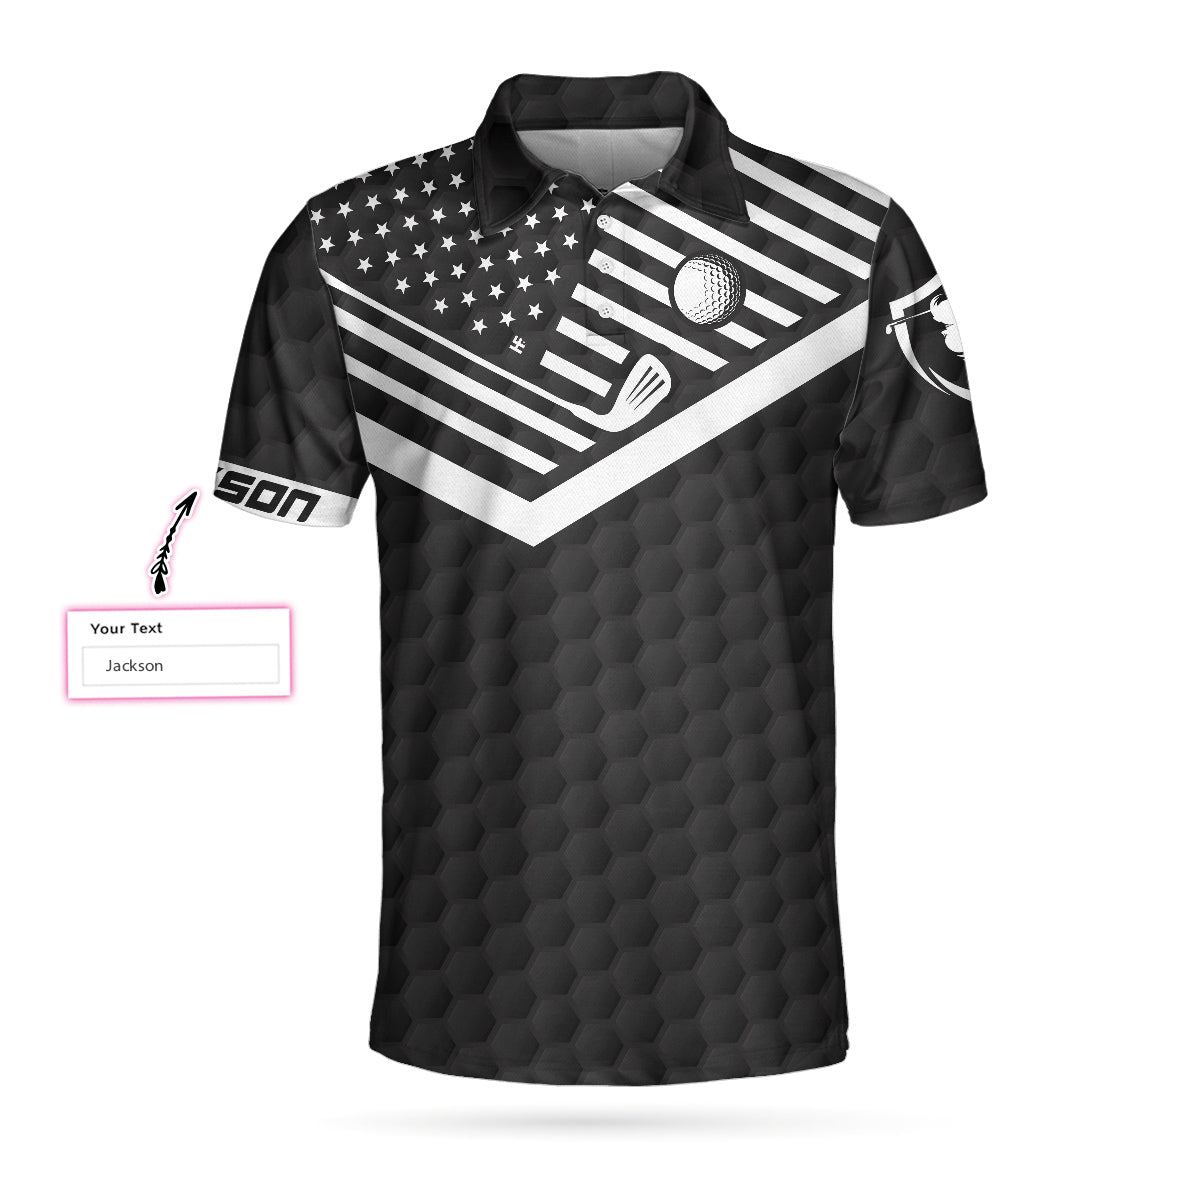 customized black american flag golf shirt for men with the worlds okayest golfer design gp438 umquo